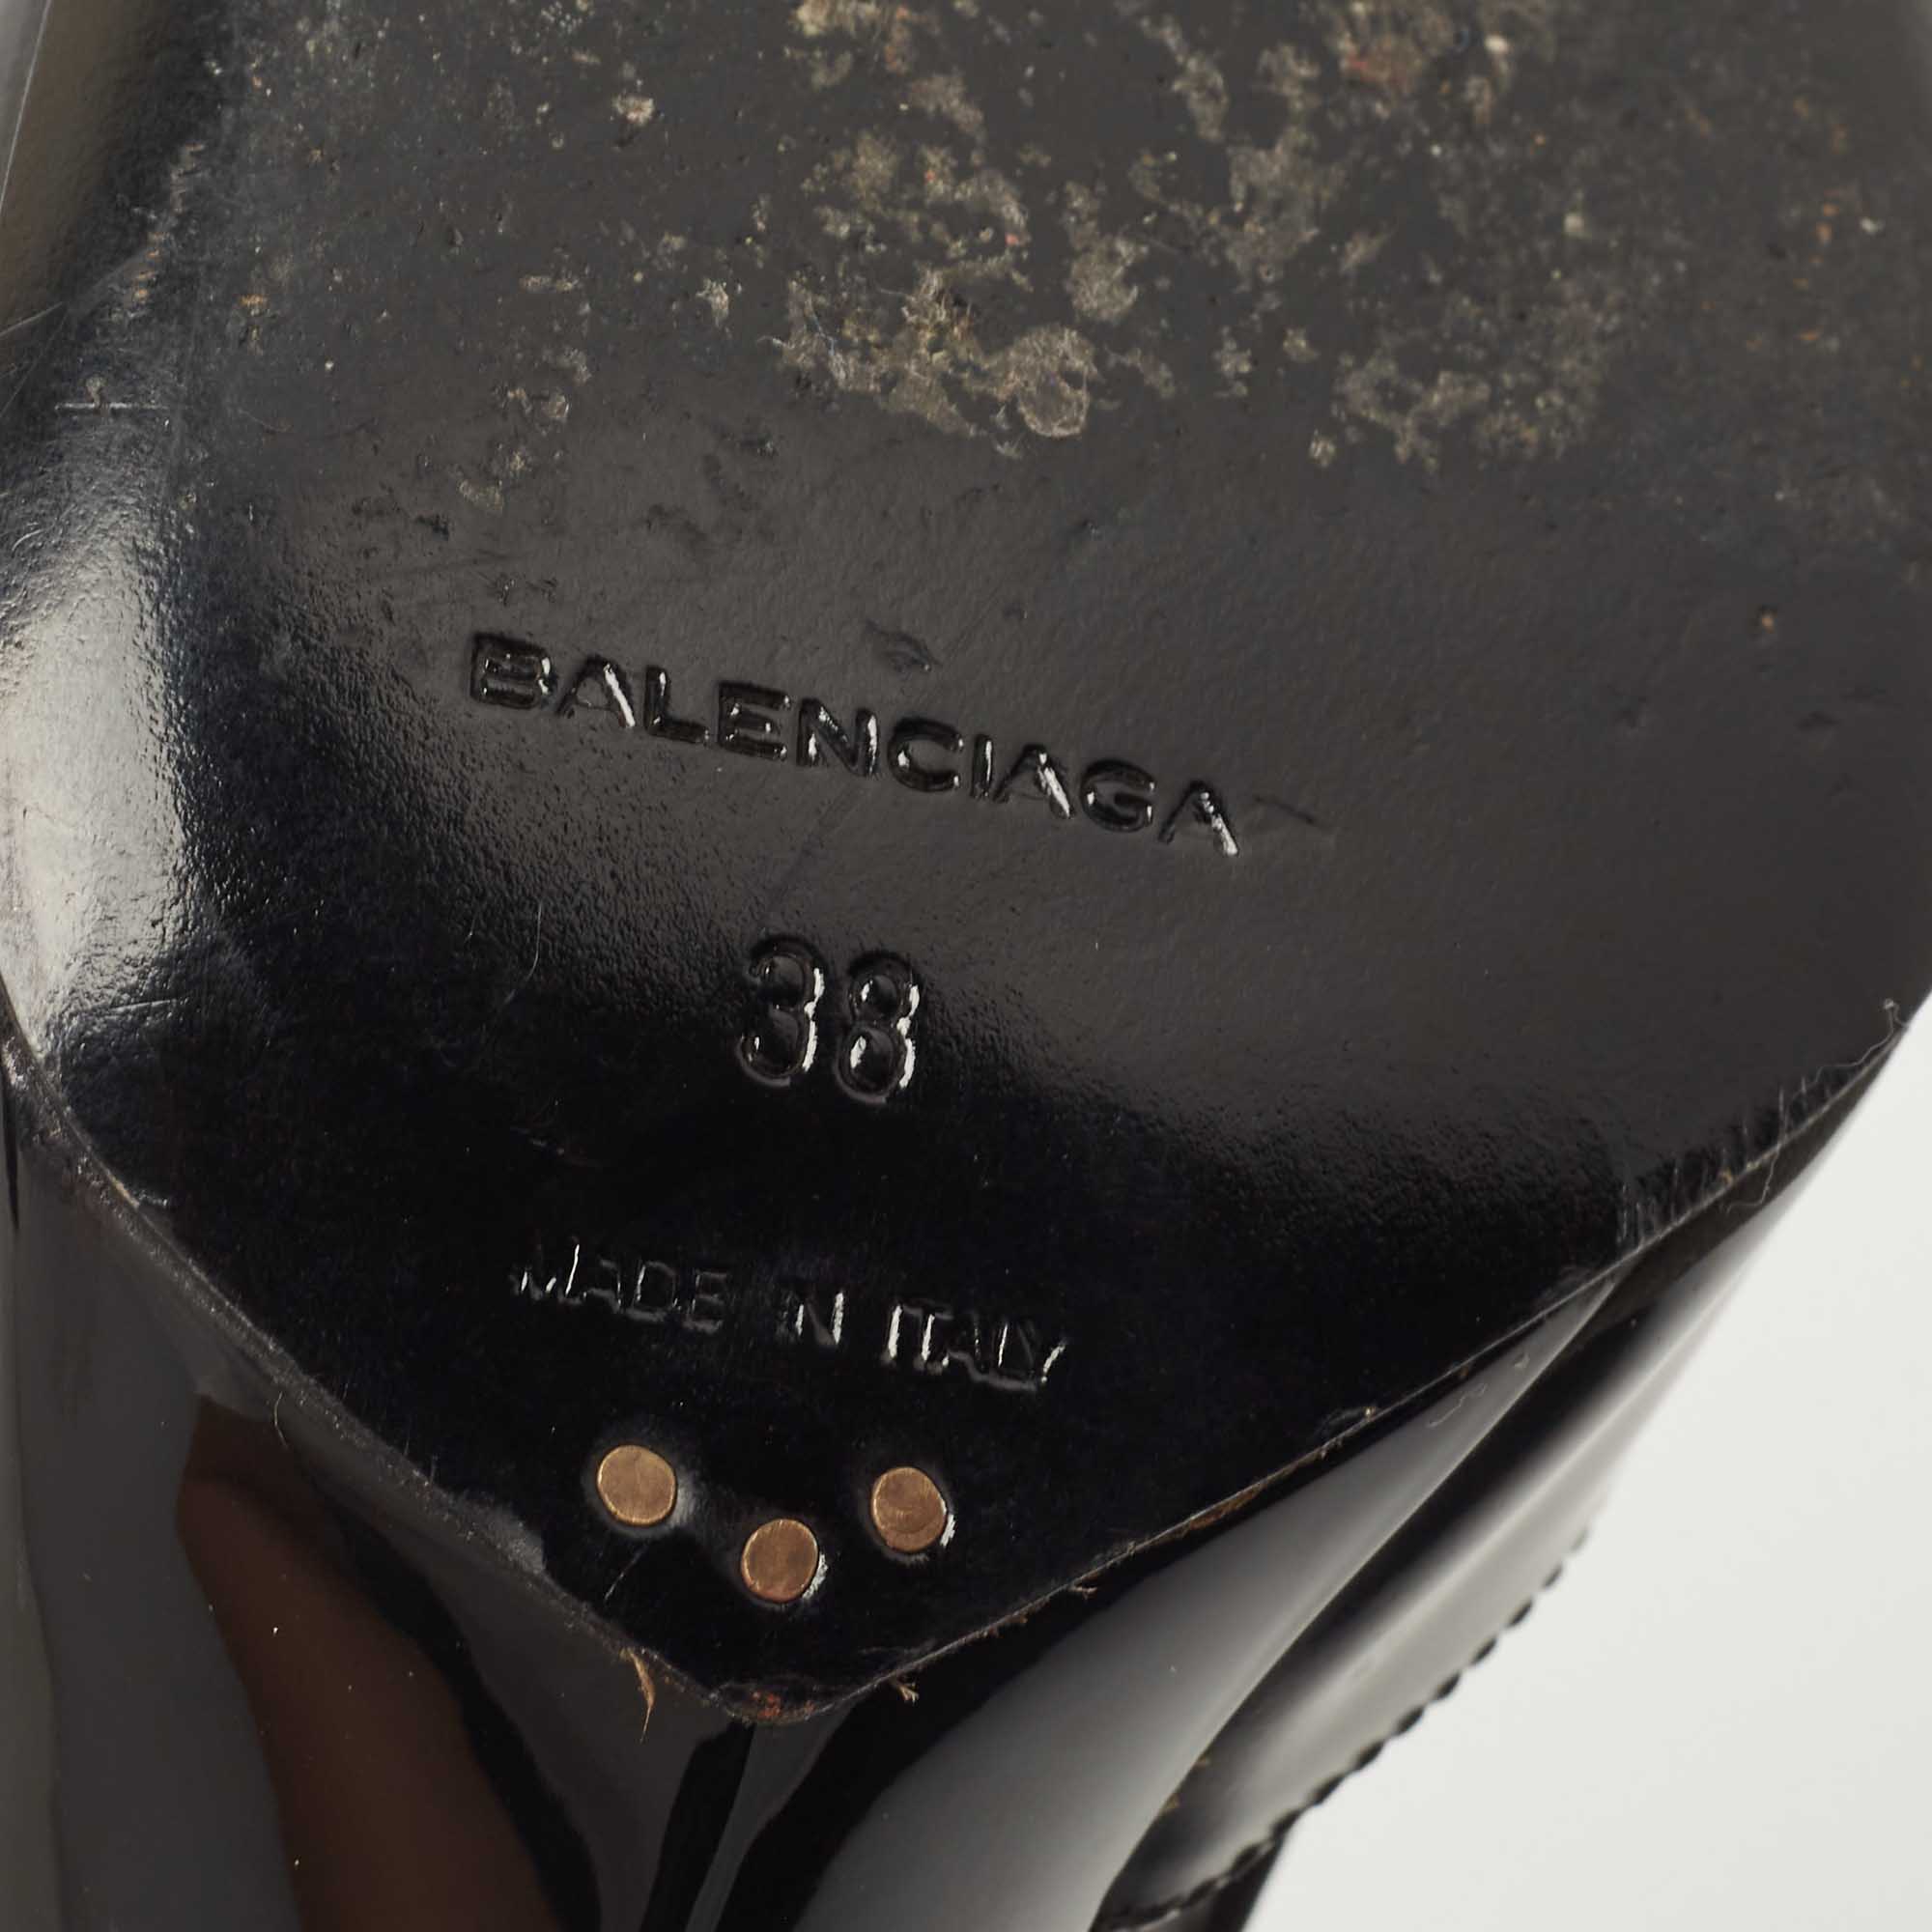 Balenciaga Black Leather Cutout Pumps Size 38